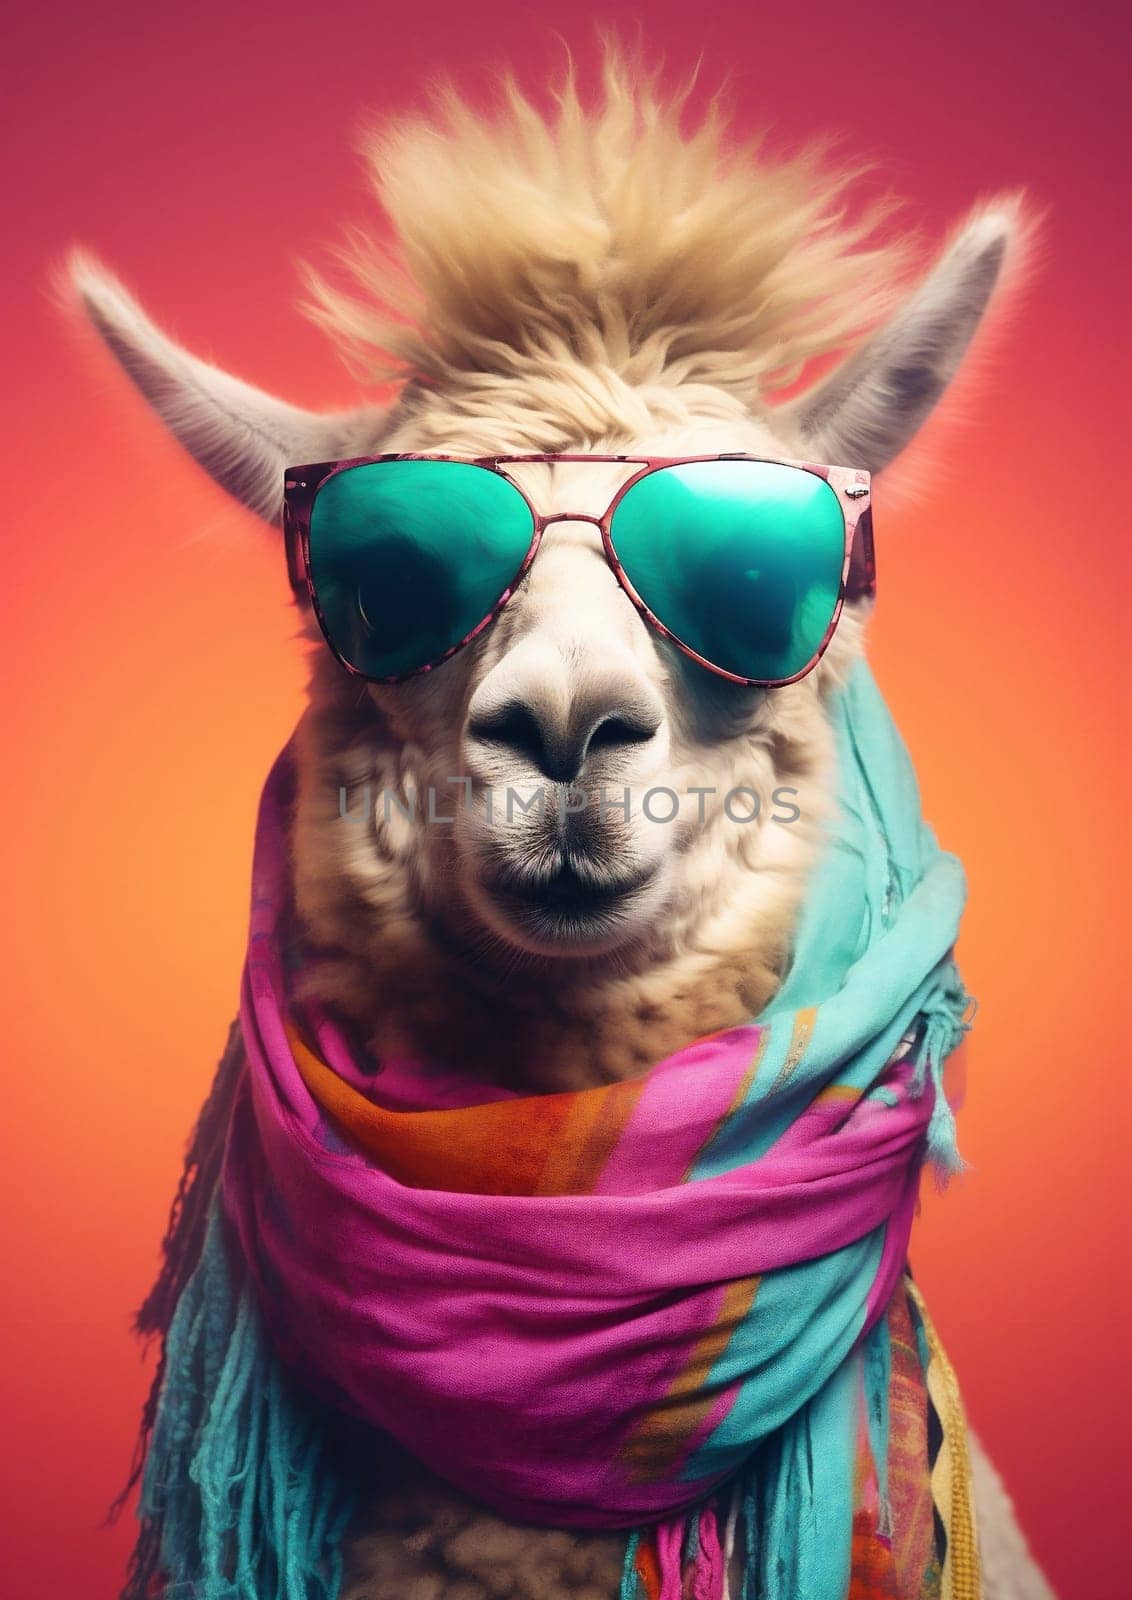 Cute stylish alpaca portrait of llama wearing glasses on blue background wearing glasses and scarf, fashion by Vichizh